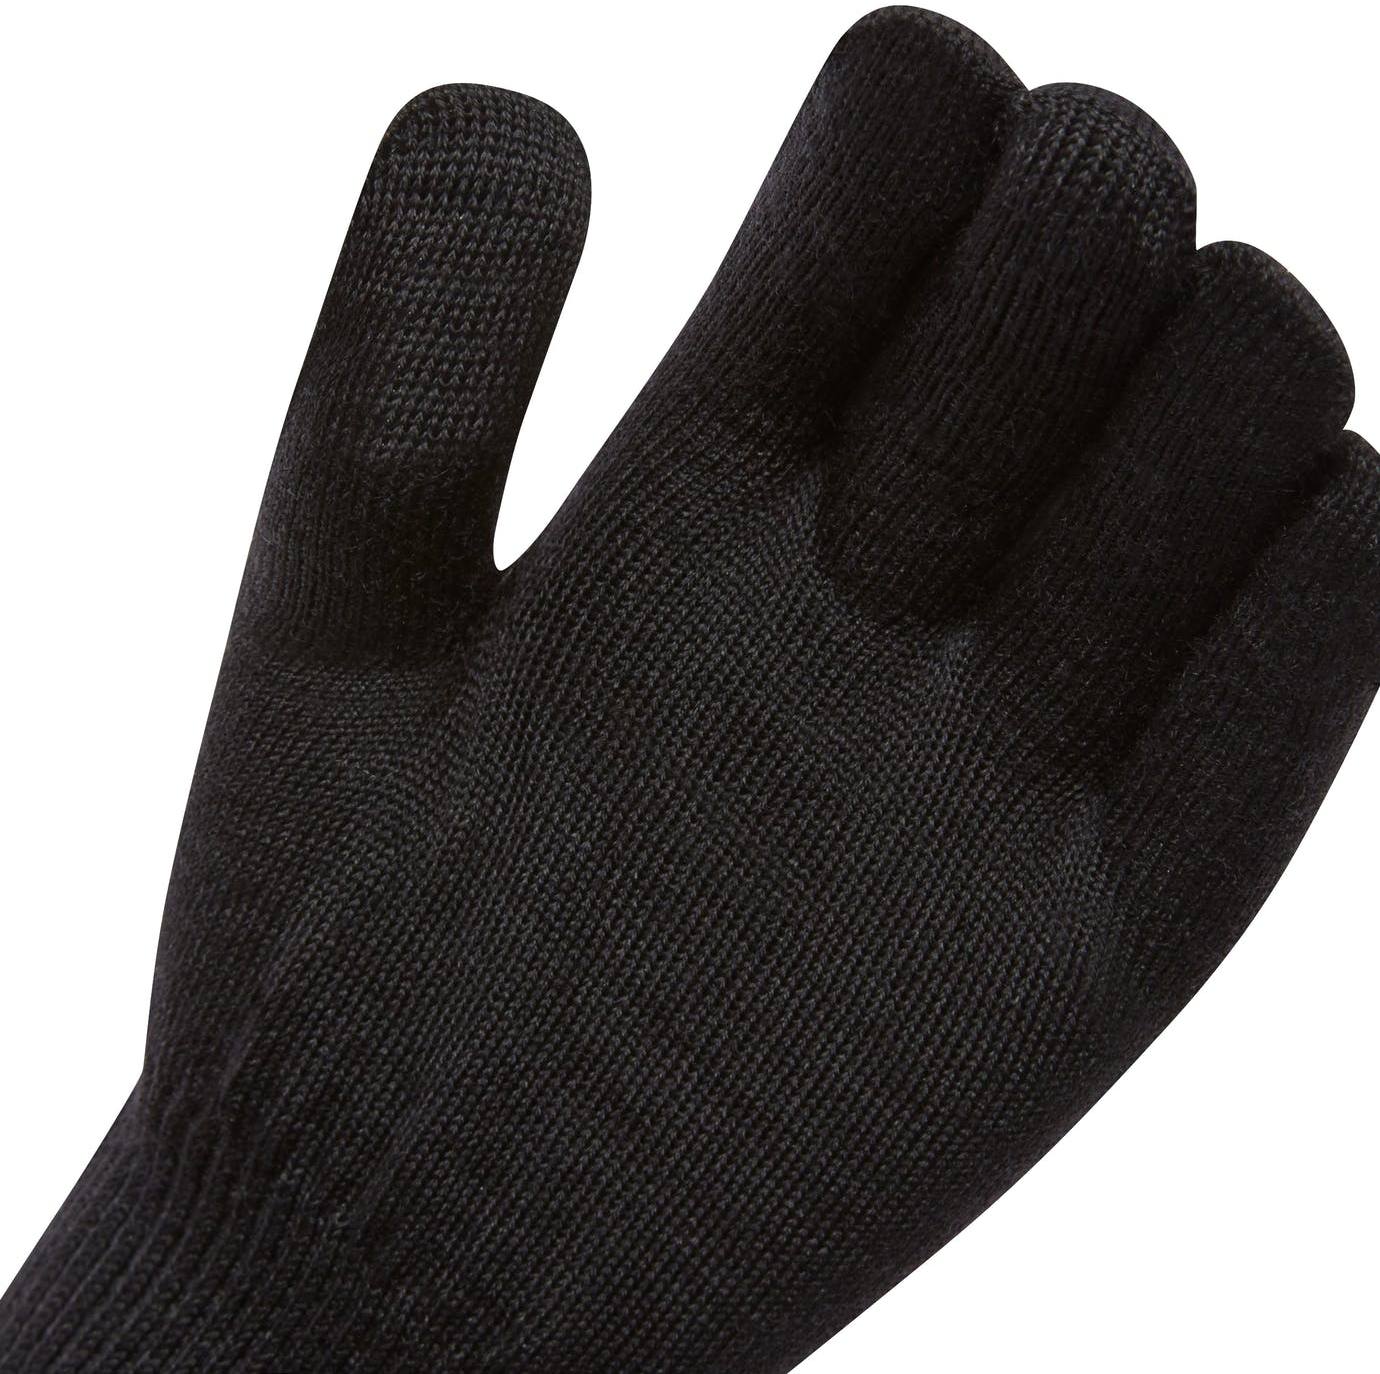 SealSkinz Solo Merino Liner Glove Musta